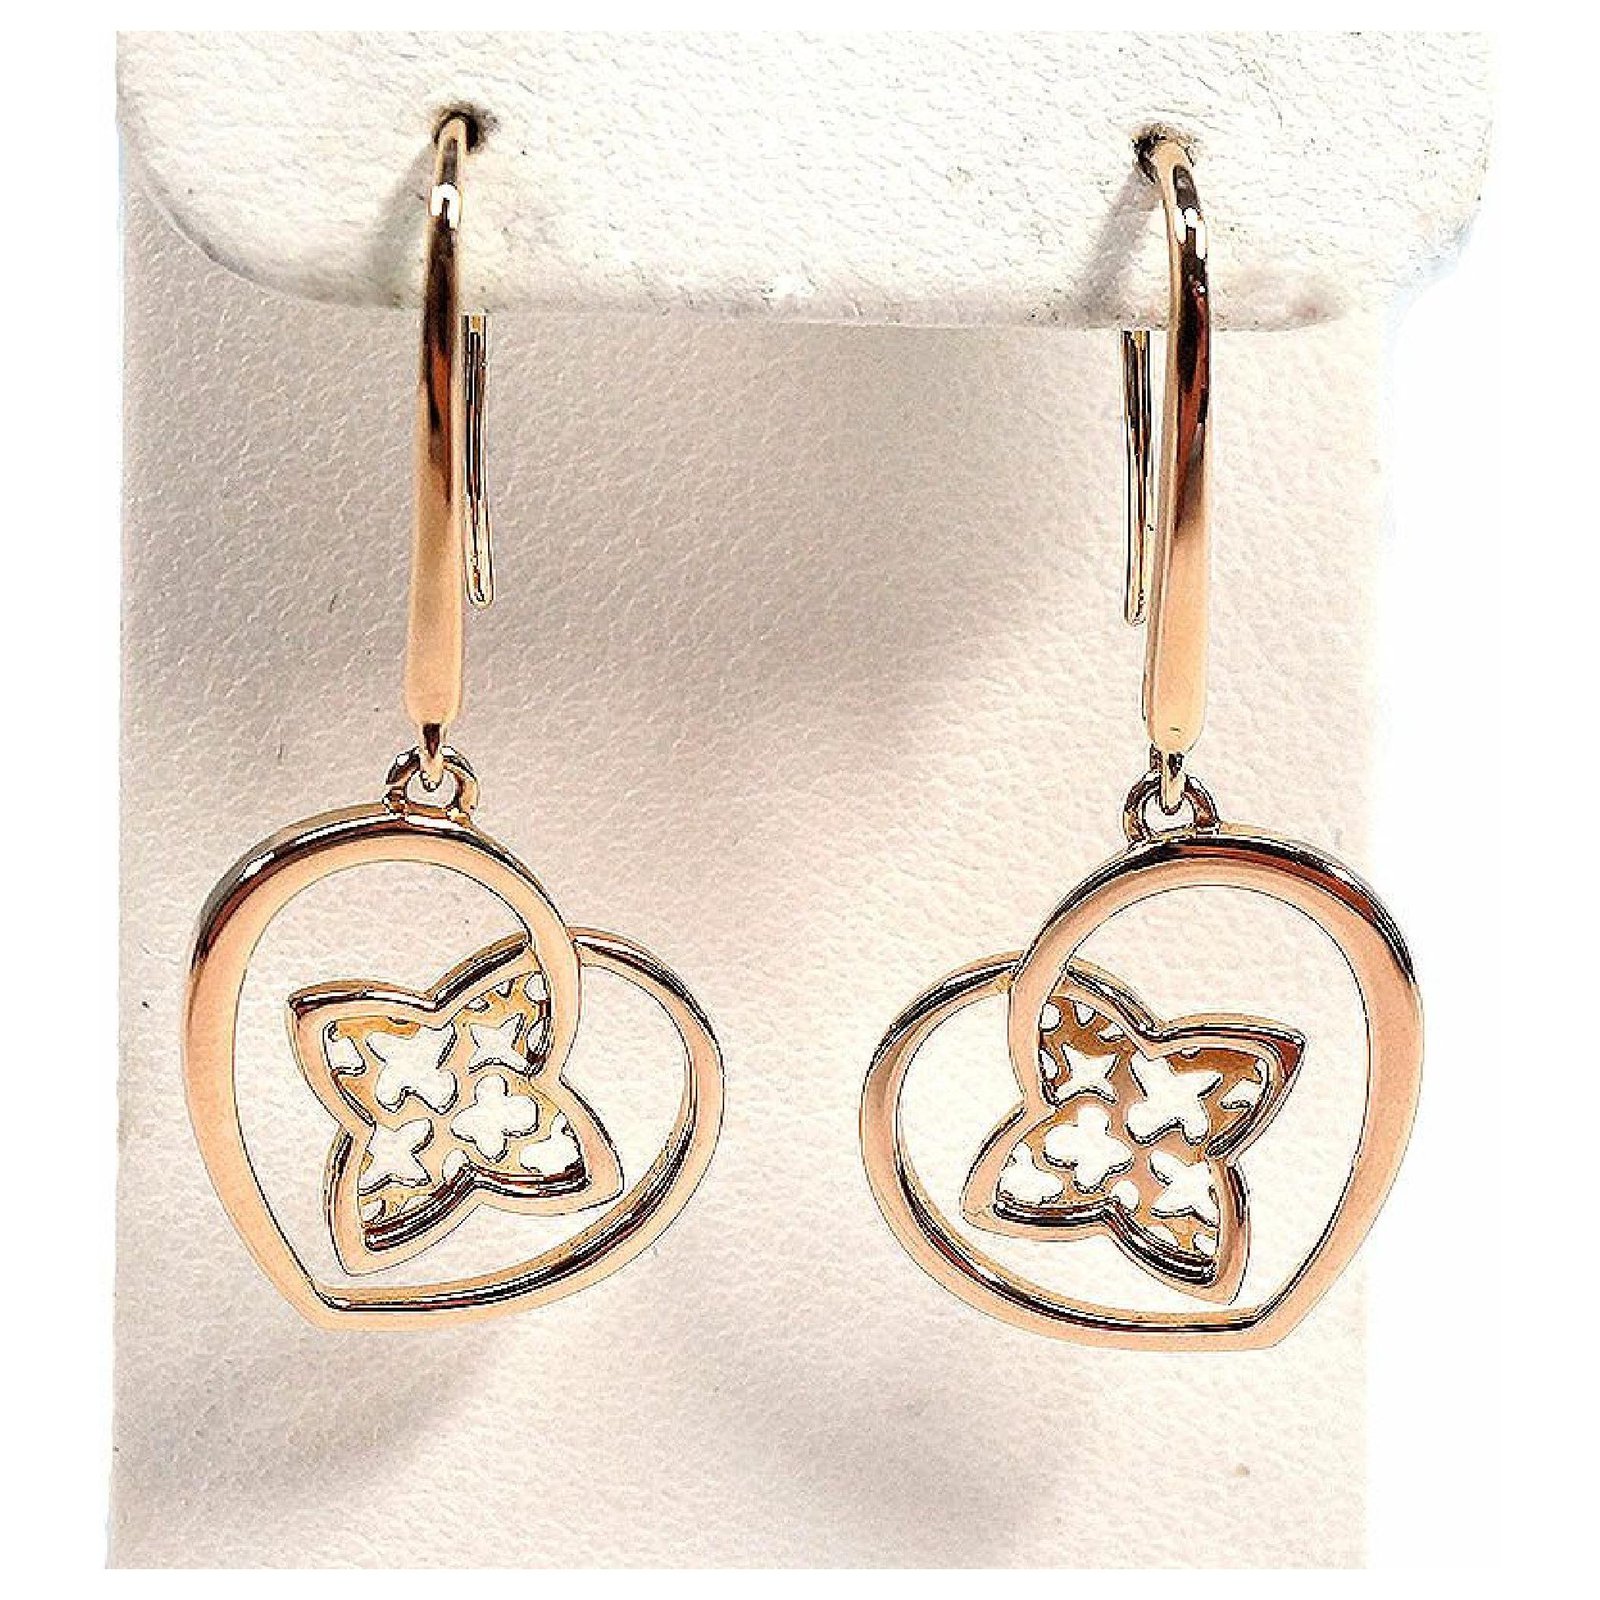 Louis Vuitton Womens Earrings, Gold